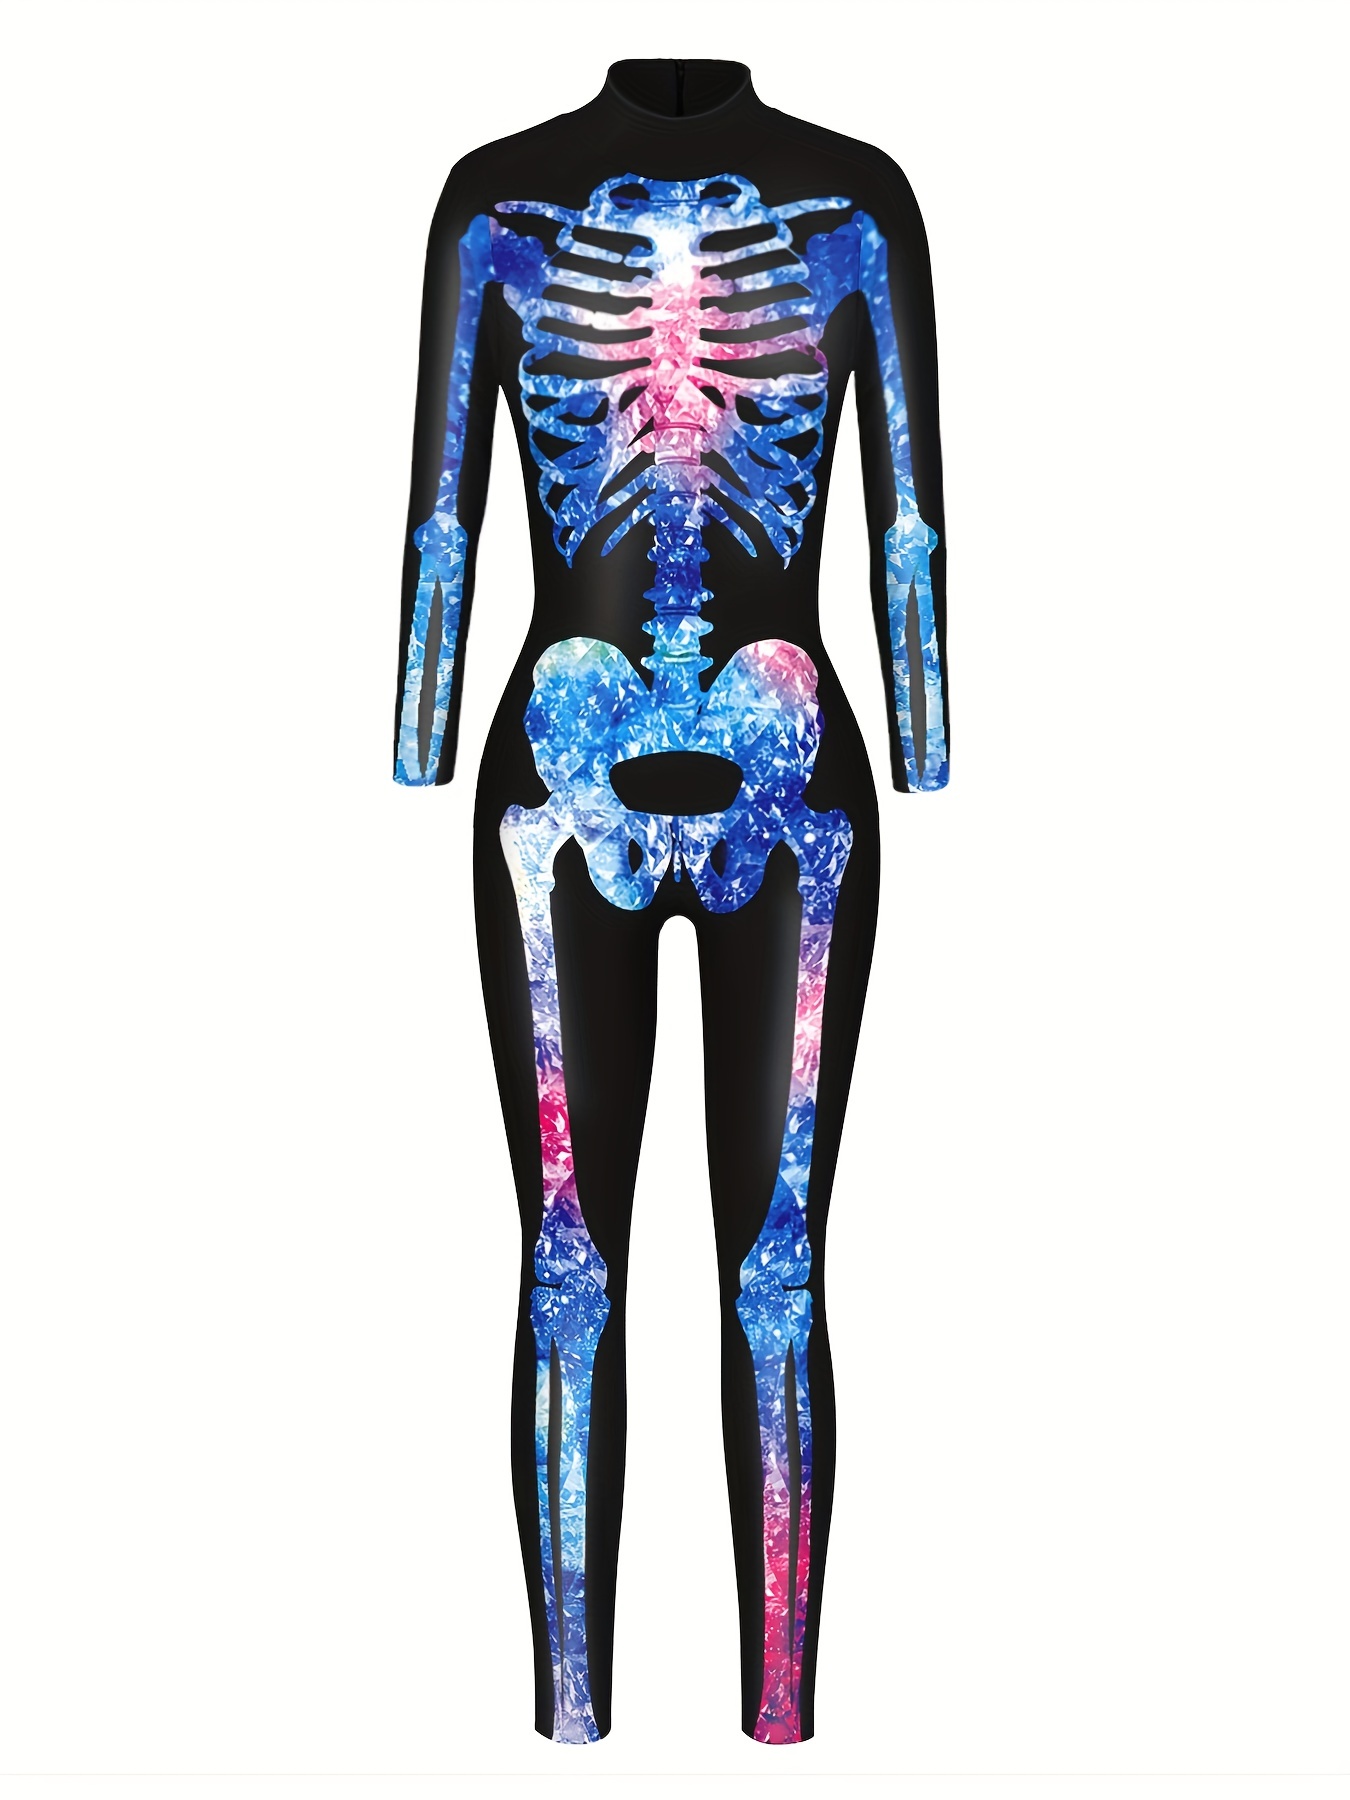 Full Bodysuit Unisex Spandex Stretch Adult Costume Halloween